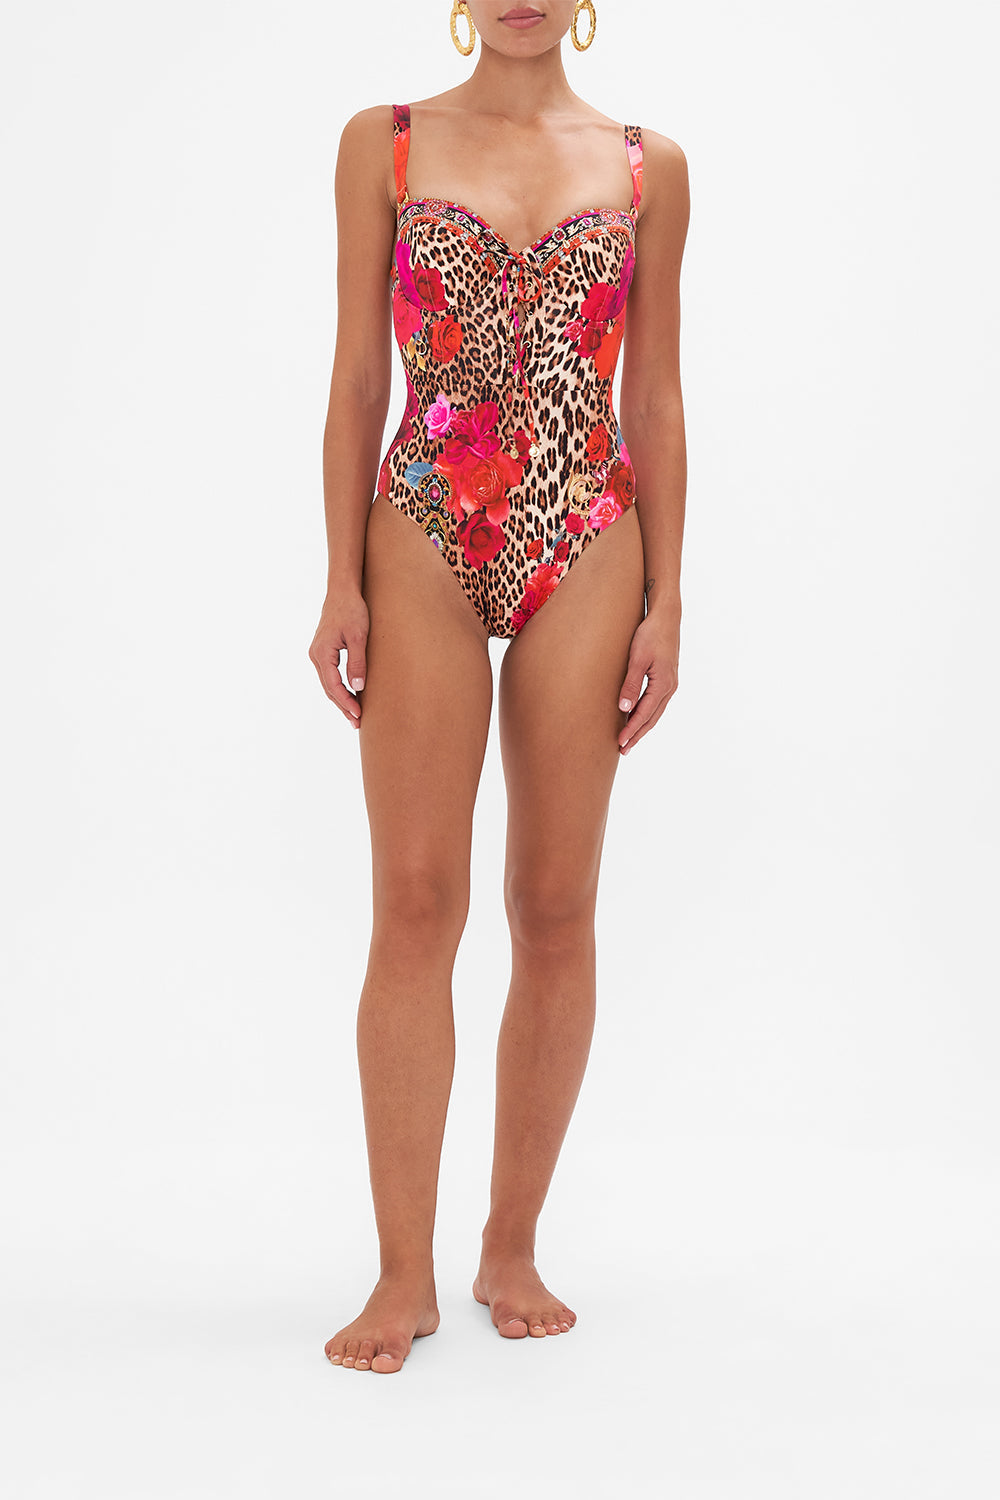 Front view of model wearing CAMILLA resortwear one piece swimsuit in Heart Like A Wildflower print